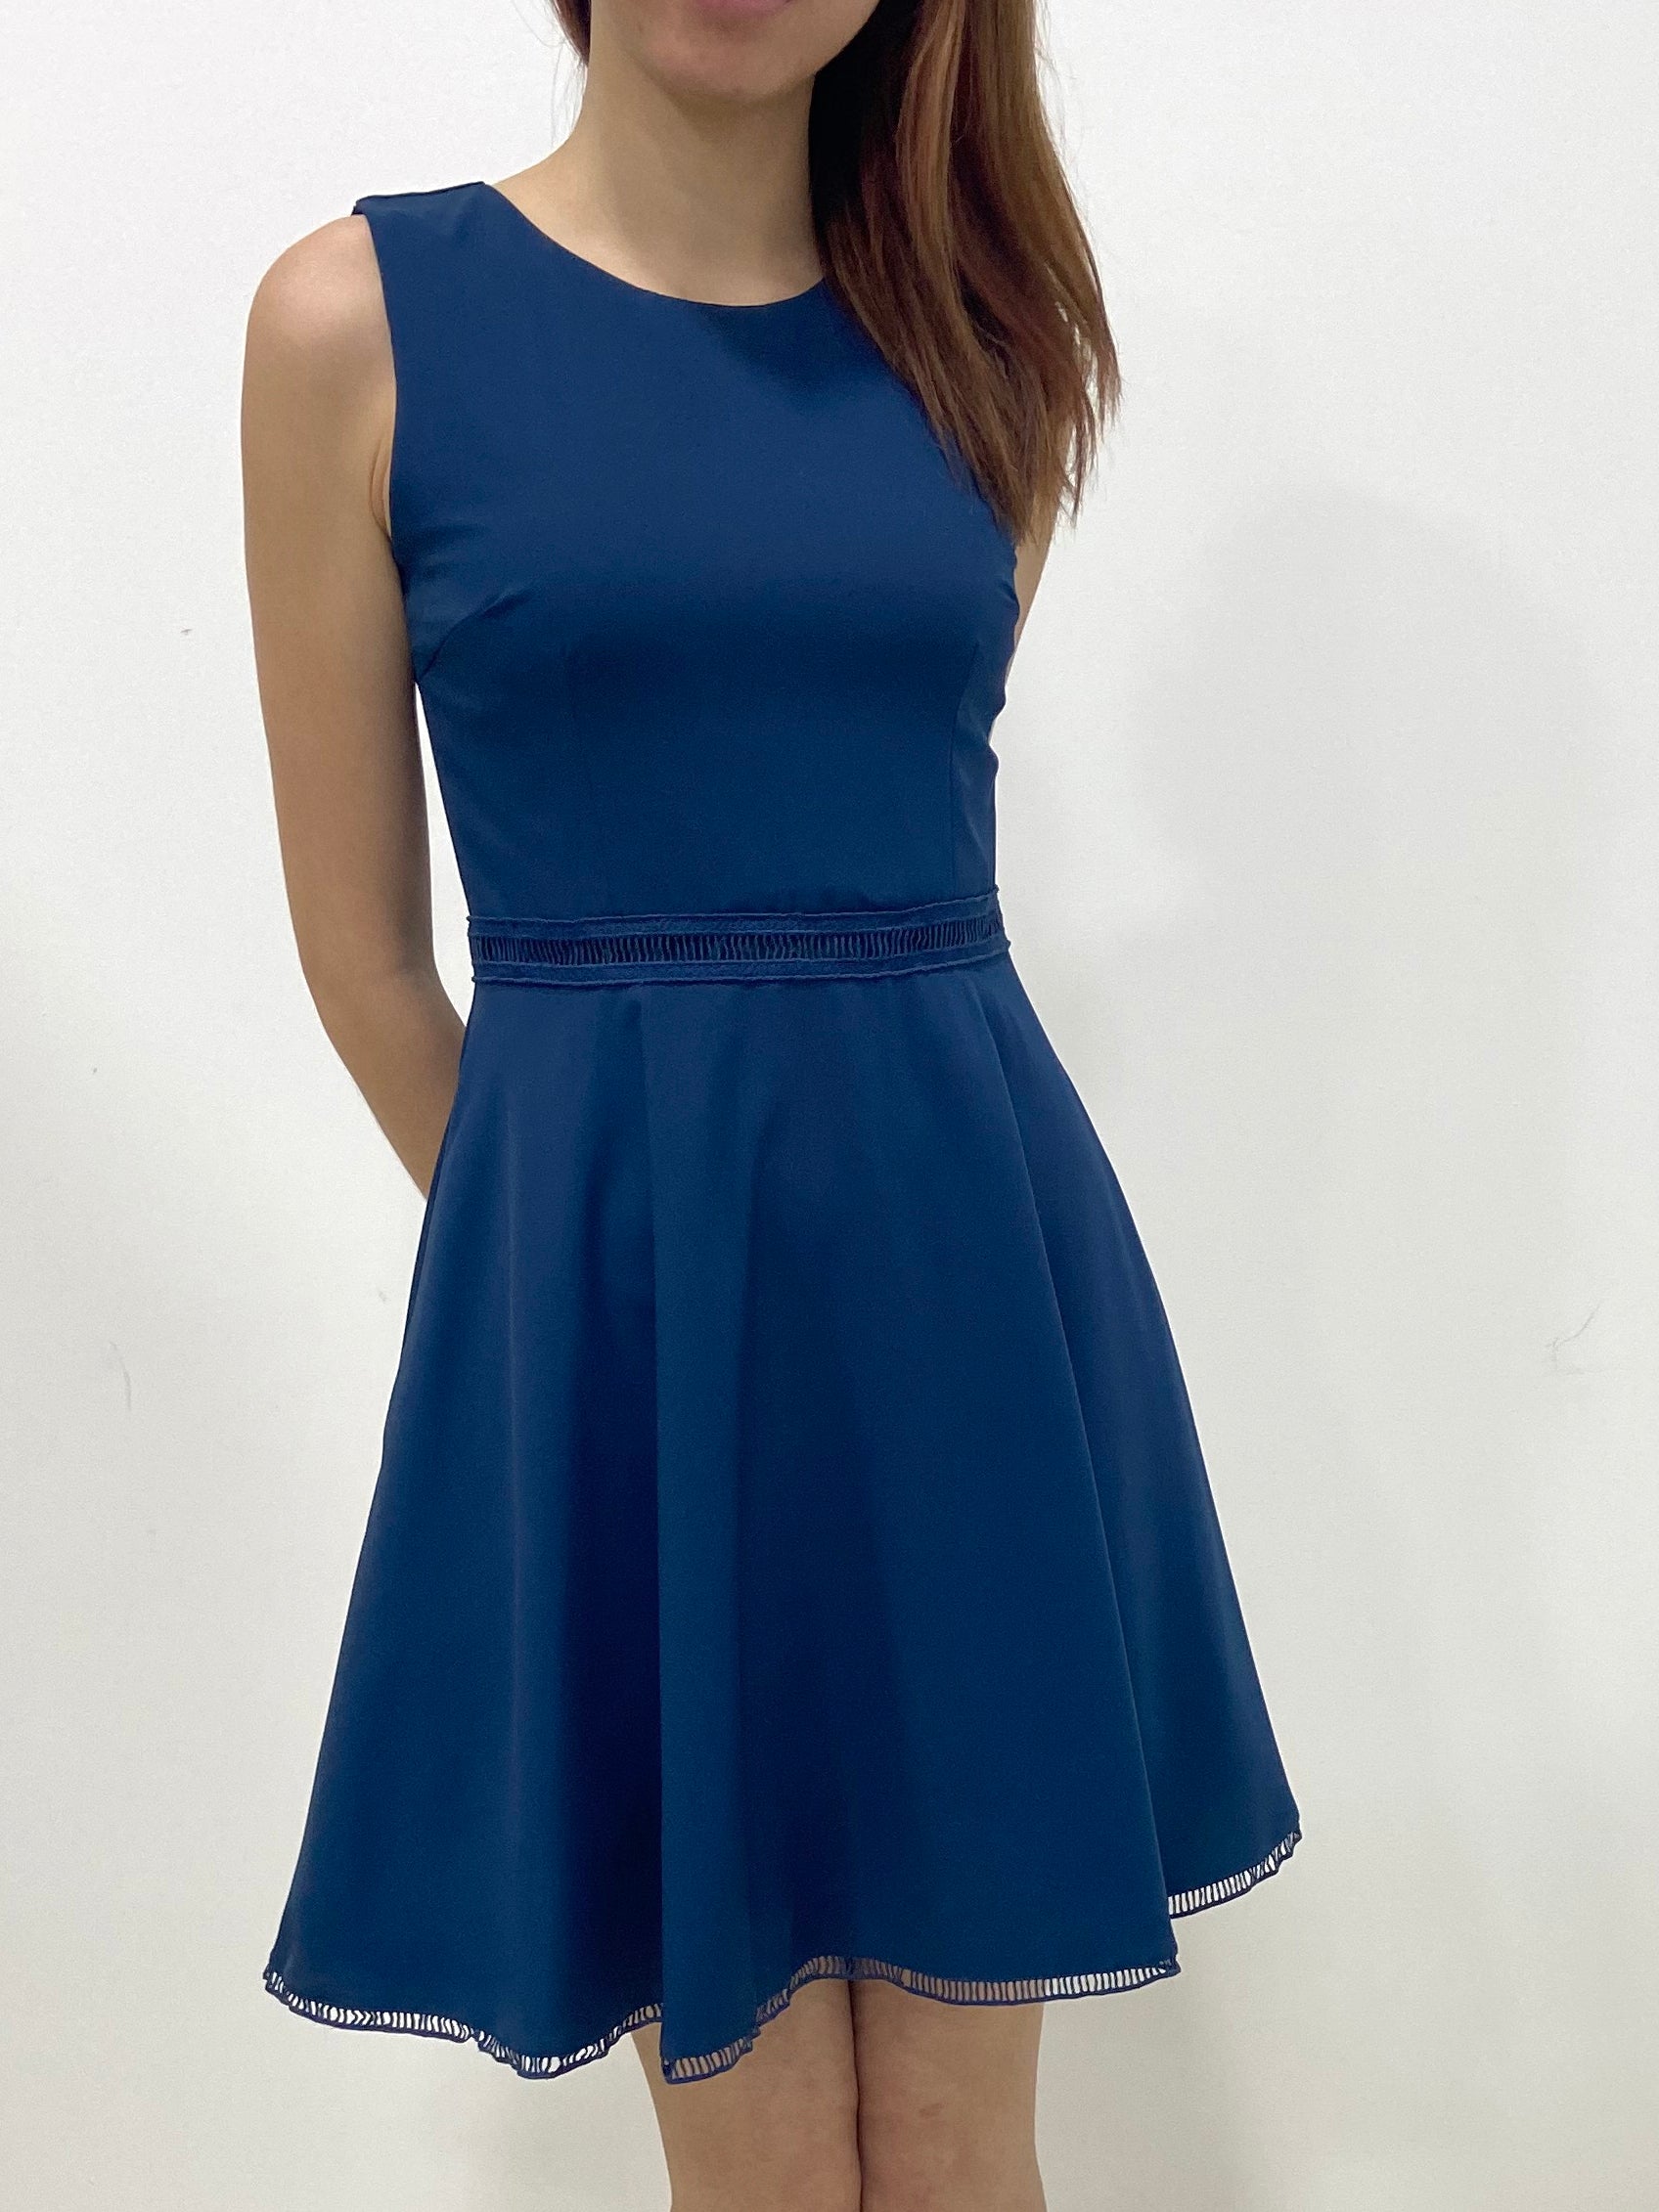 Ladder Lace Dress - Blue (Non-returnable) - Ferlicious